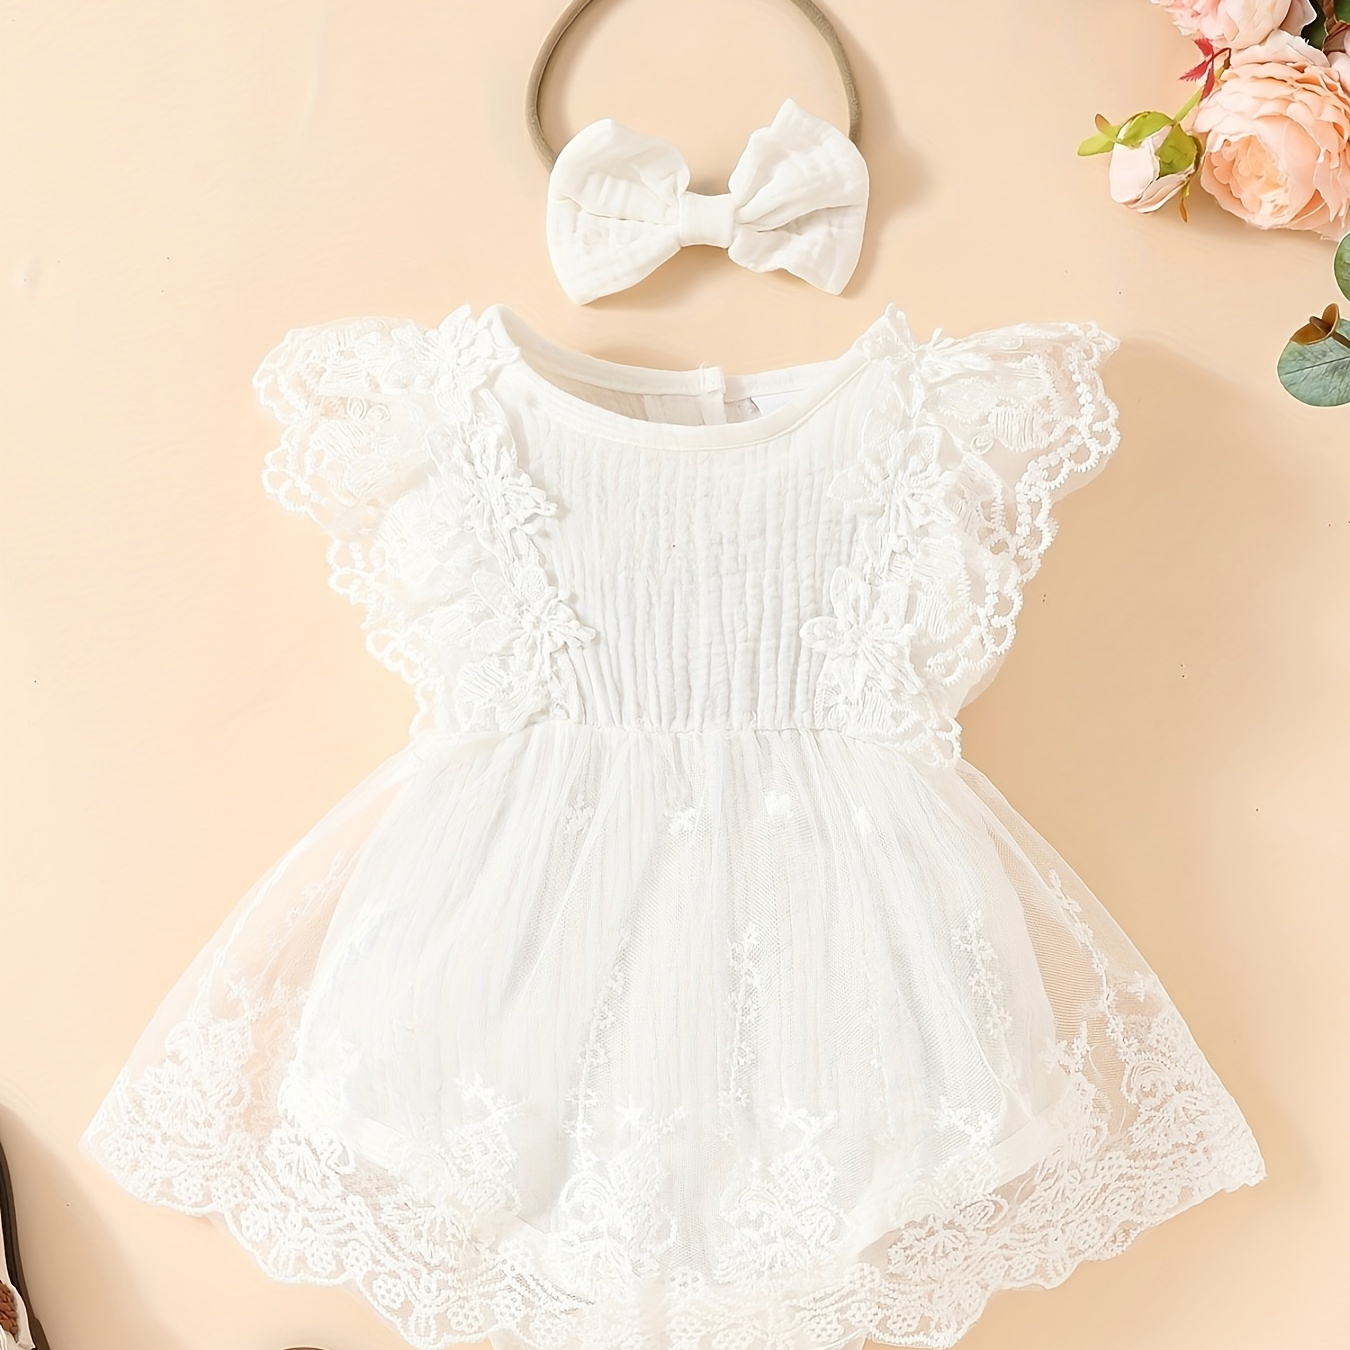 

Baby's Elegant Lace Mesh Splicing Sleeveless Dress, Infant & Toddler Girl's Clothing For Summer, As Christening Gift